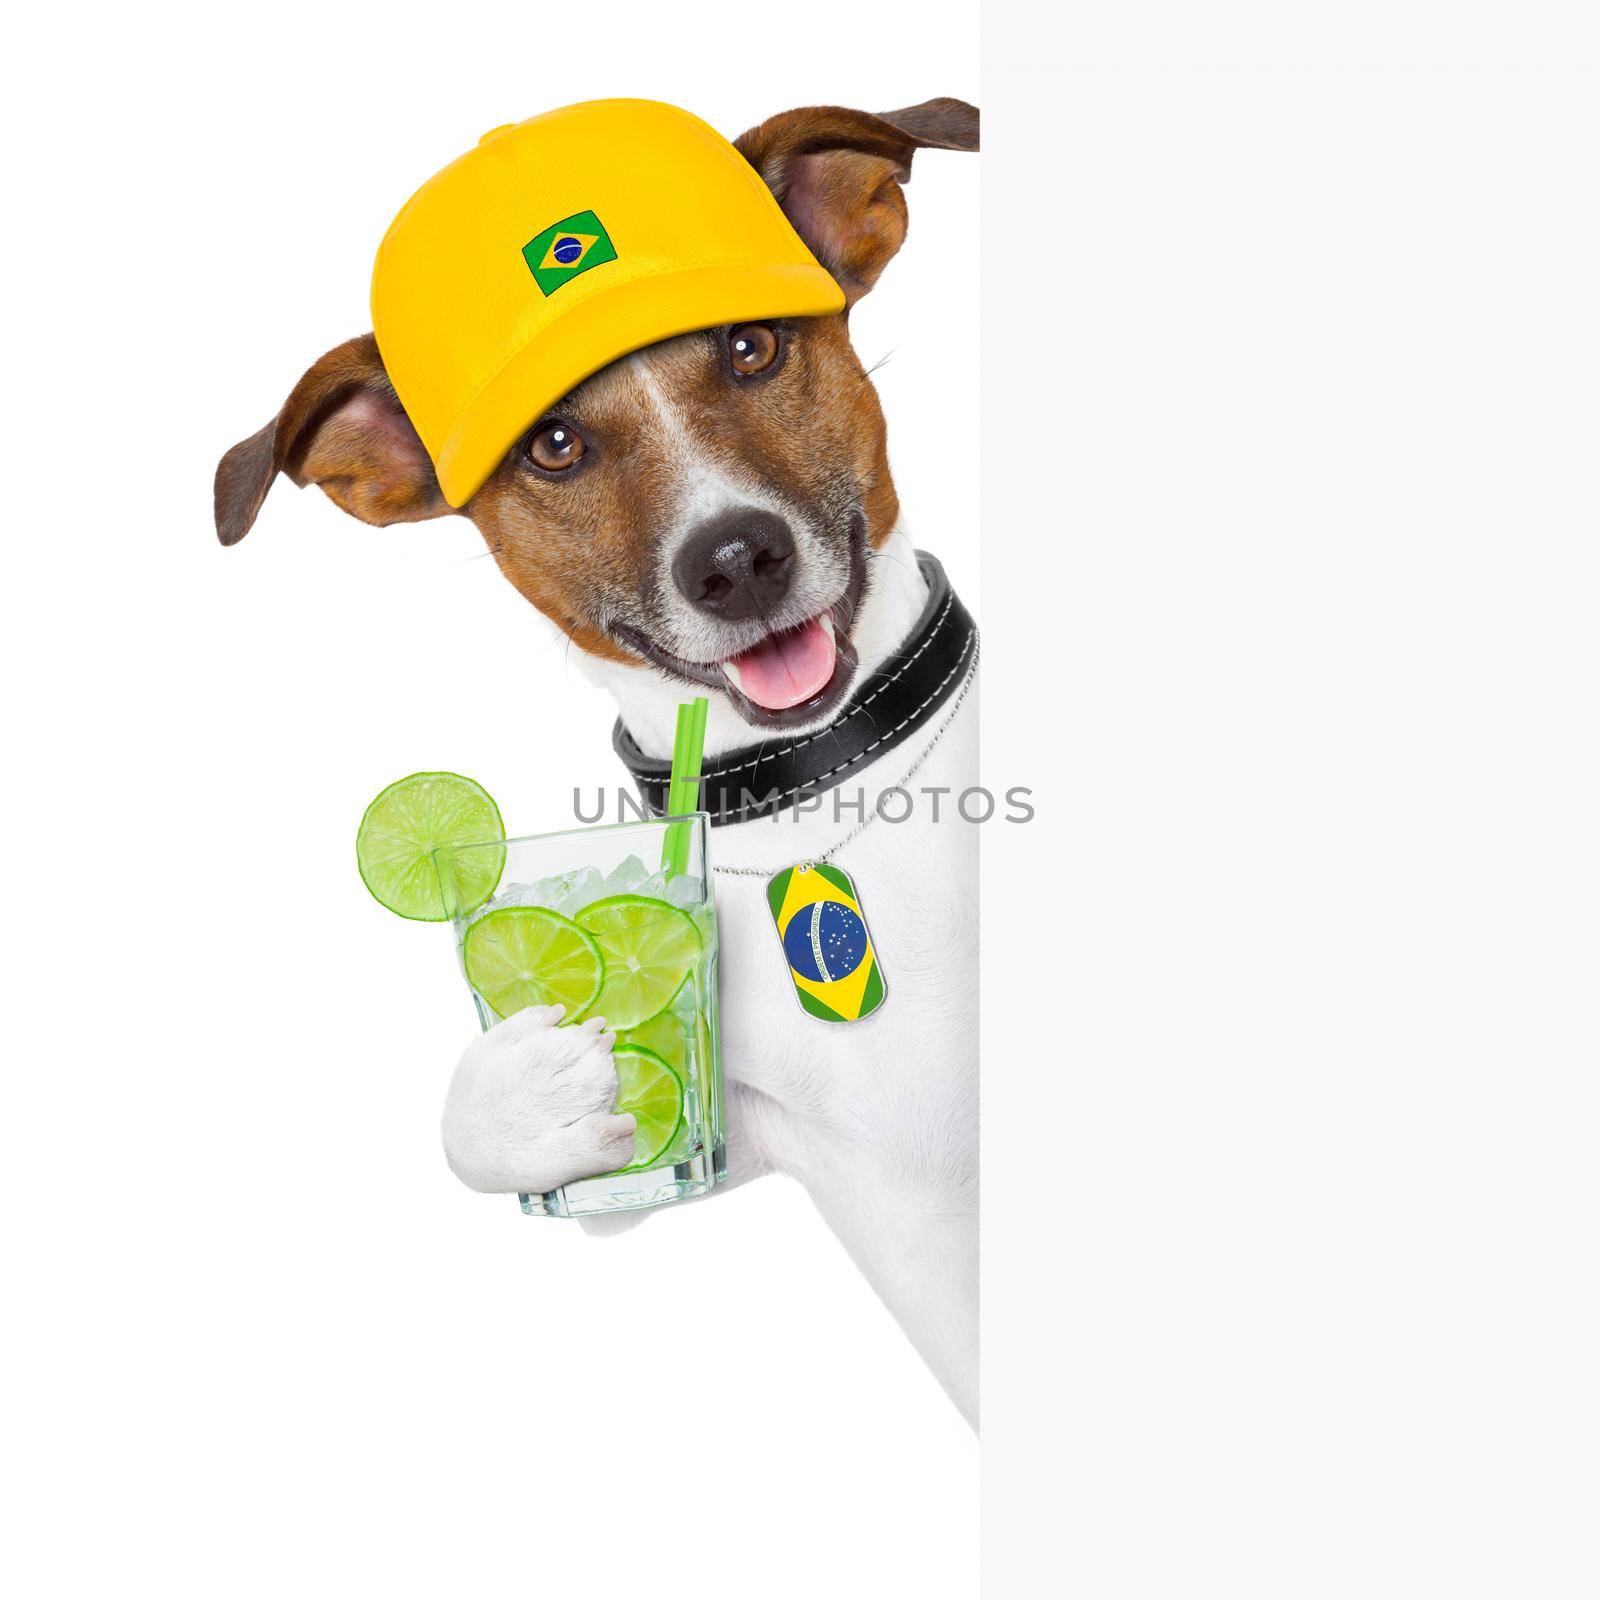 brazil samba dog with caipirinha, behind white banner